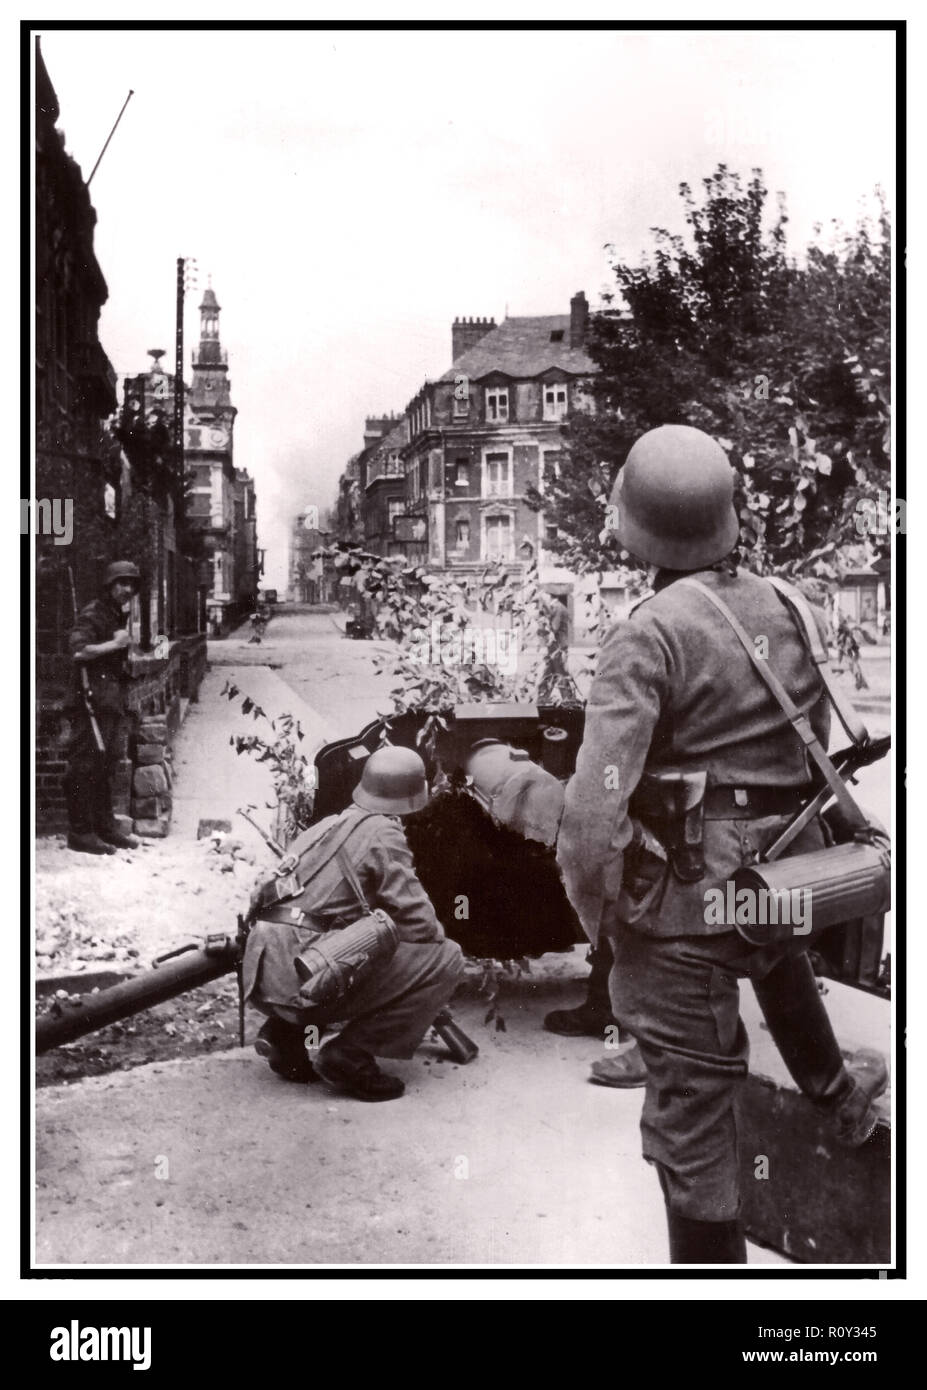 WW2 Dieppe street fighting Vintage Nazi Wehrmacht  Army with distinct  Stahlhelm helmets during raid on Dieppe WW2 image Wehrmacht raid Dieppe Northern France 1942 Stock Photo